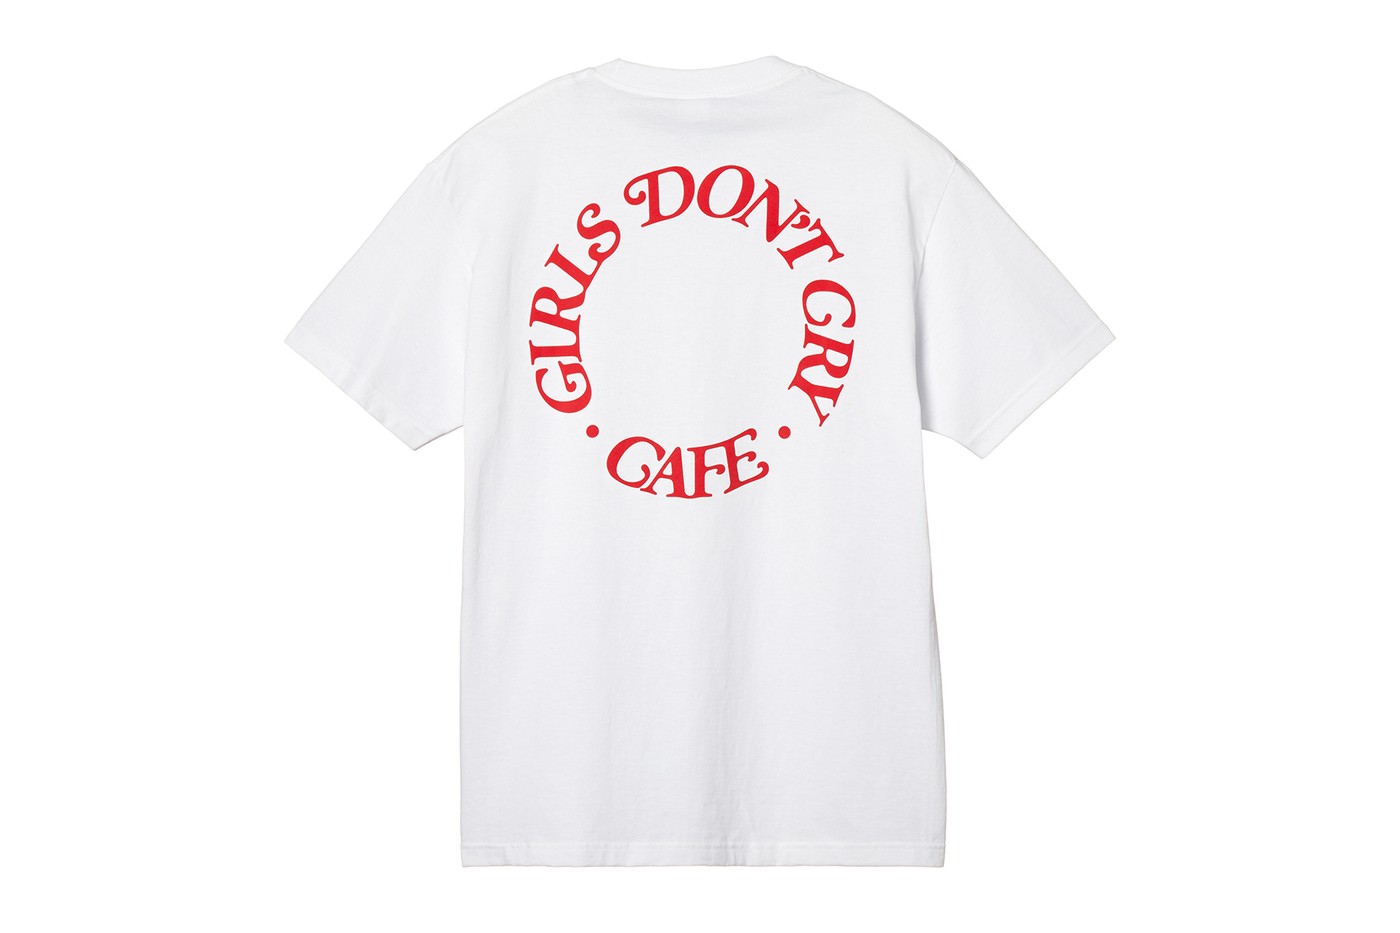 Girls Don’t Cry × Amazon Fashion